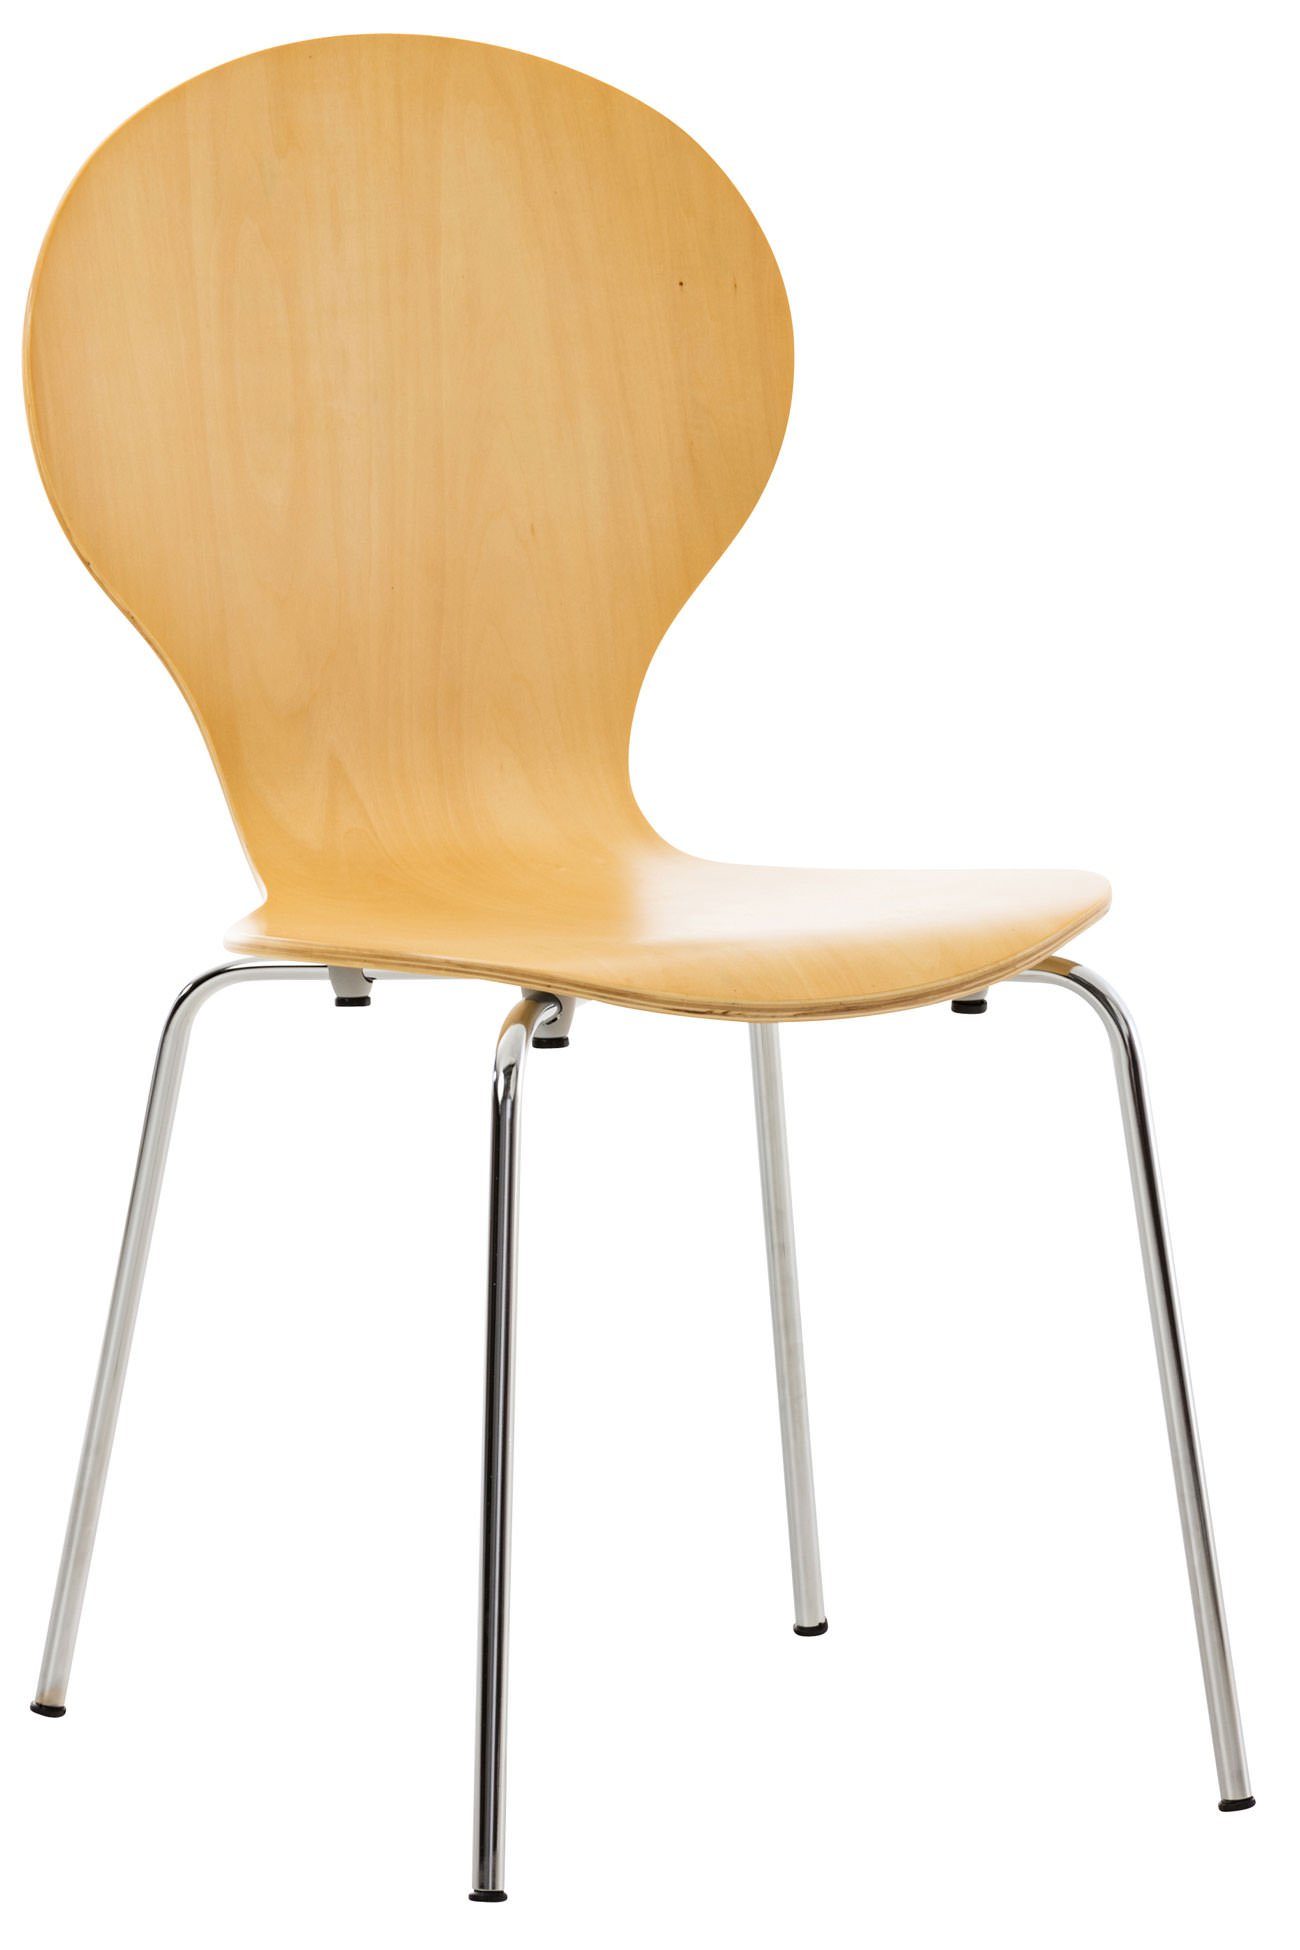 TPFLiving Besucherstuhl Daggy mit ergonomisch geformter Sitzfläche - Konferenzstuhl (Besprechungsstuhl - Warteraumstuhl - Messestuhl), Gestell: Metall chrom - Sitzfläche: Holz Natura